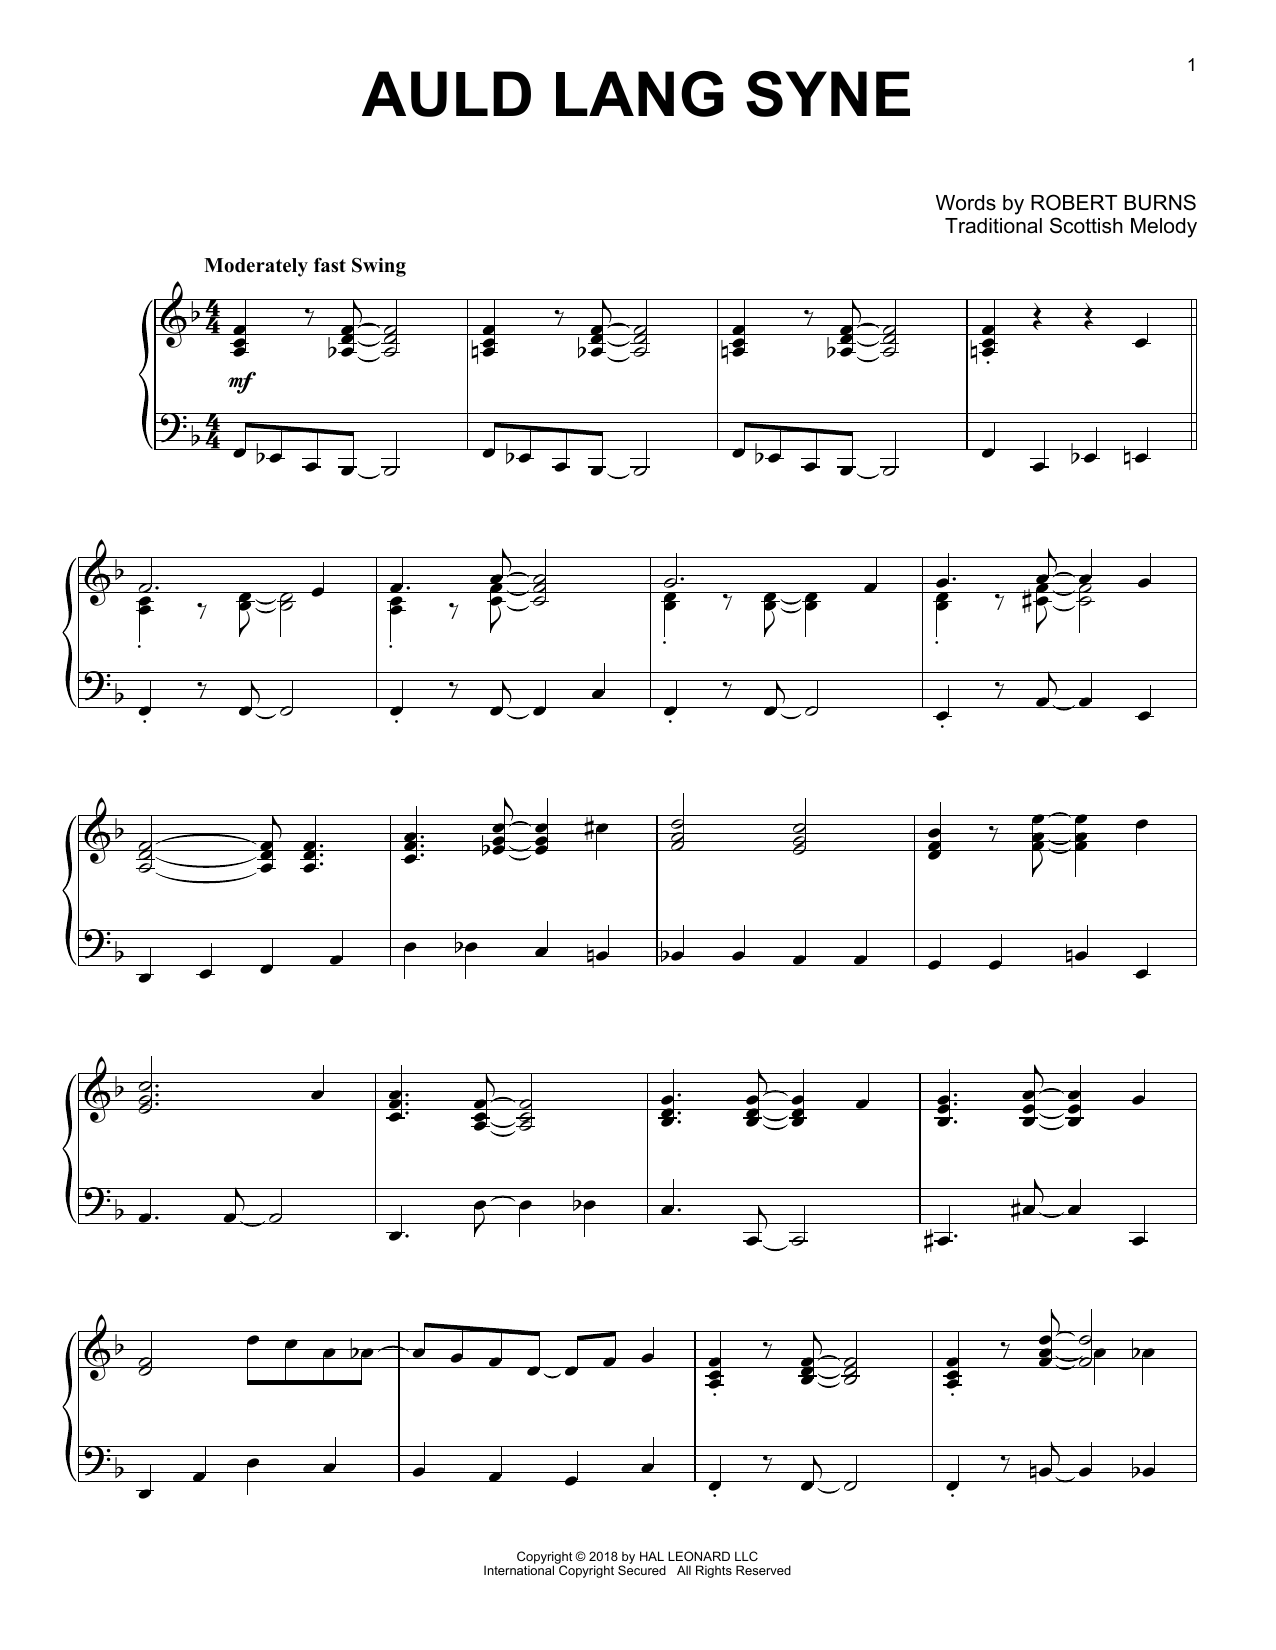 Robert Burns Auld Lang Syne [Jazz version] Sheet Music Notes & Chords for Piano - Download or Print PDF